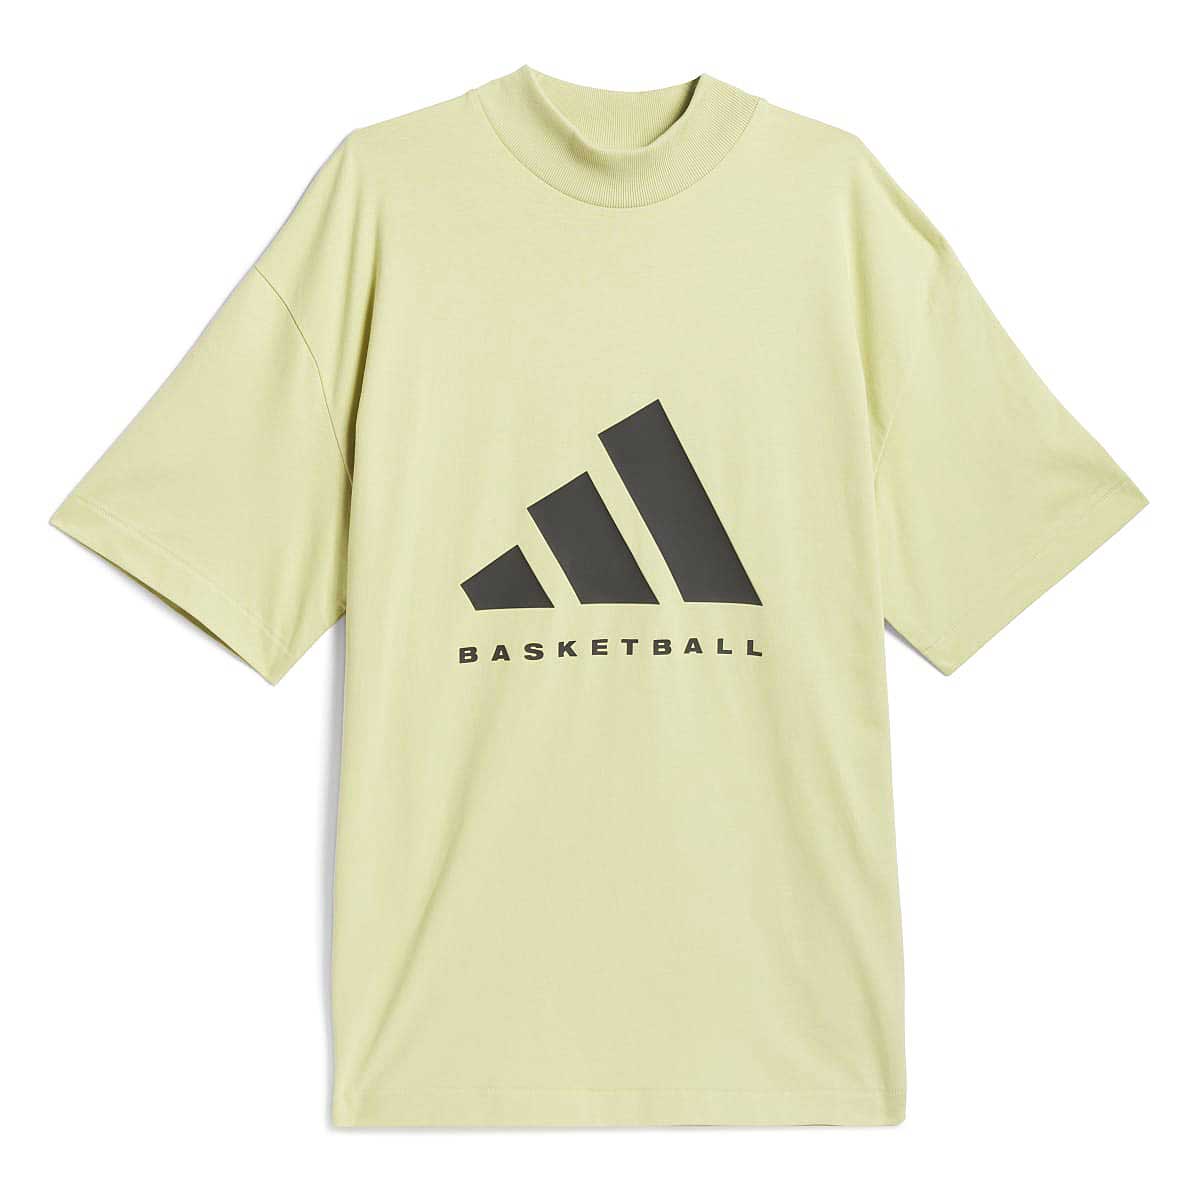 Adidas Chapter 1 Basketball T-shirt, Halgol/halgol S